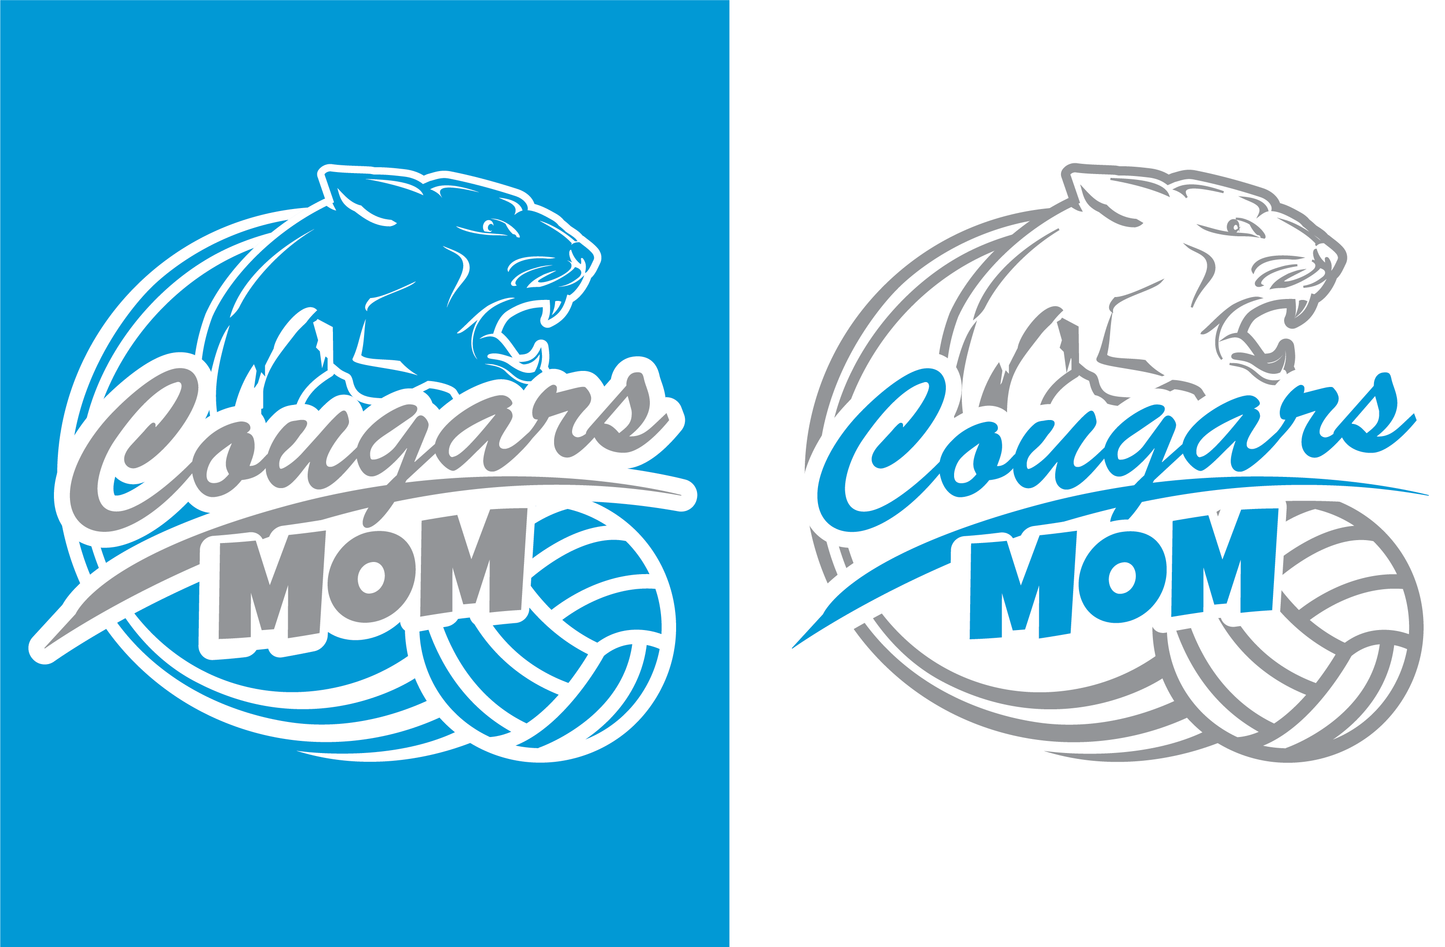 Cougars Mom Apparel